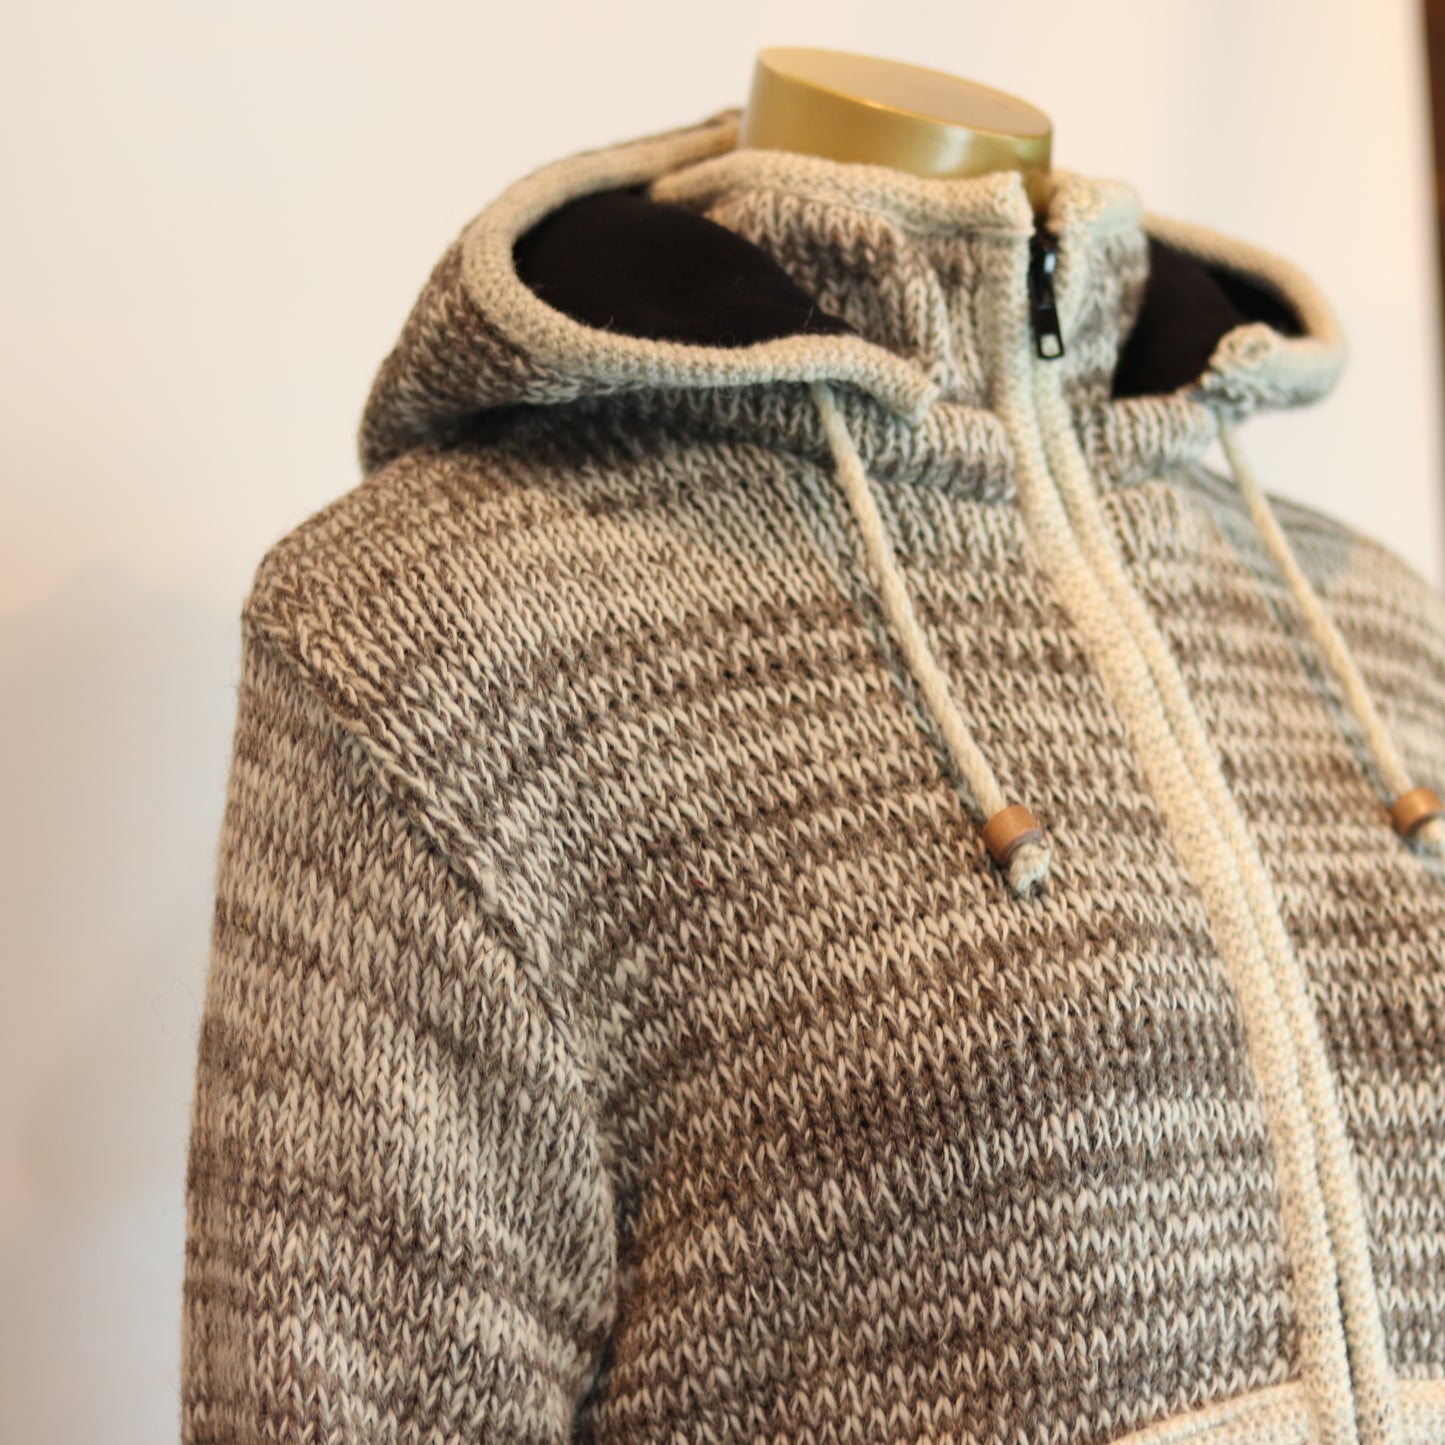 Everest Natural Prairies 100% Wool Jacket with Fleece Lining